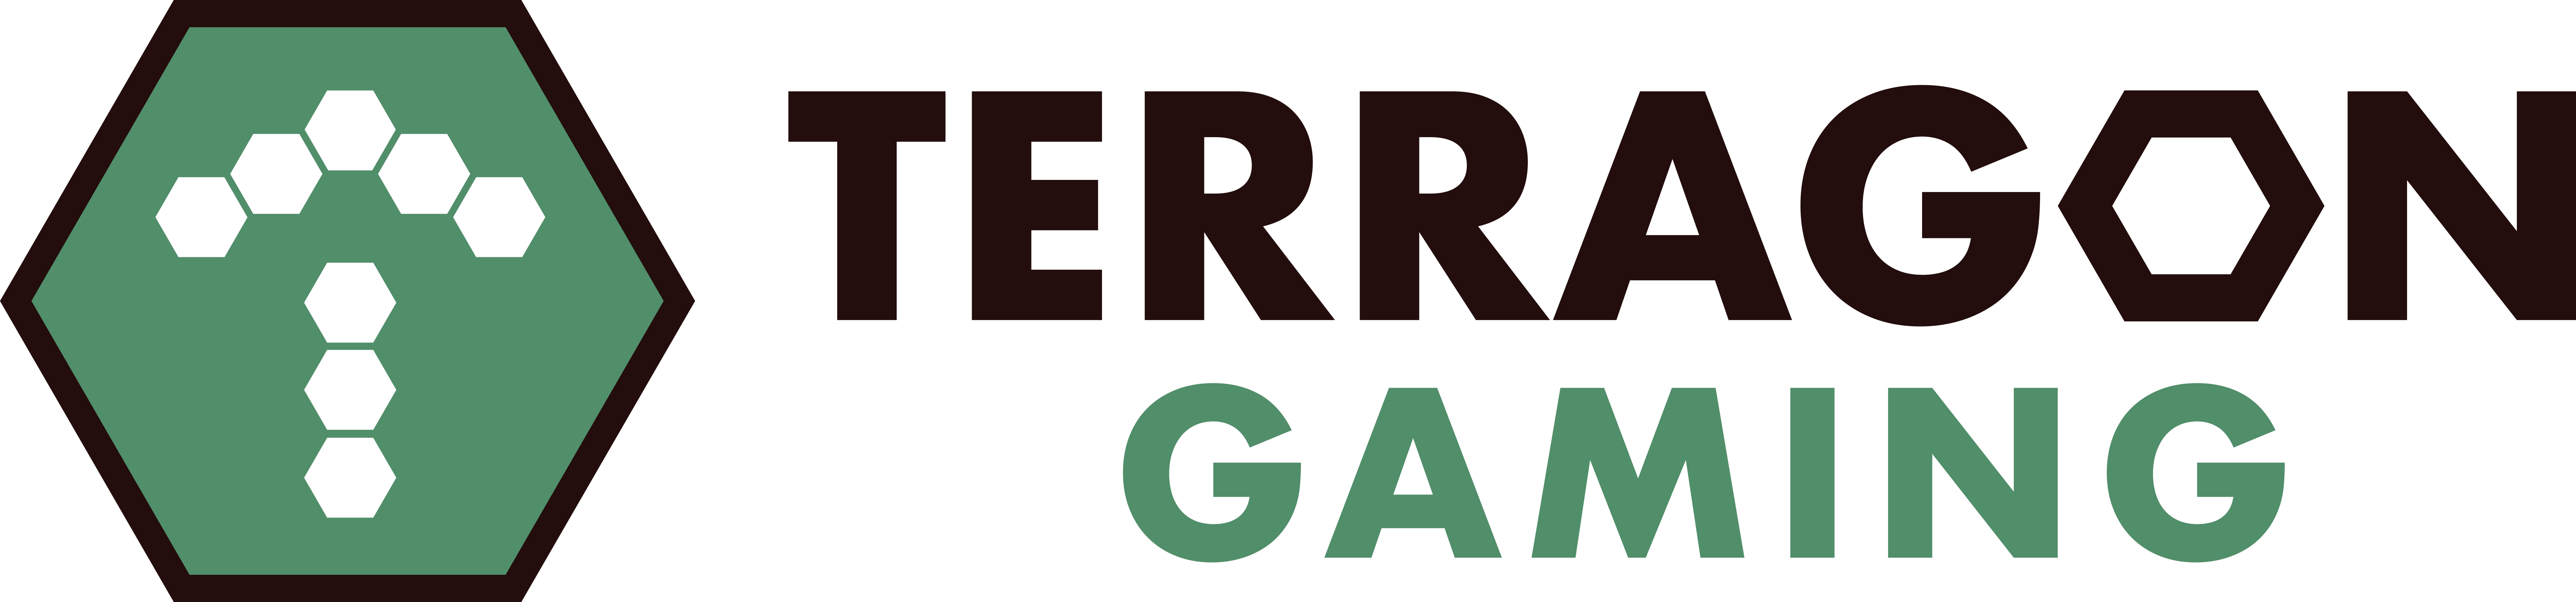 Terragon Gaming